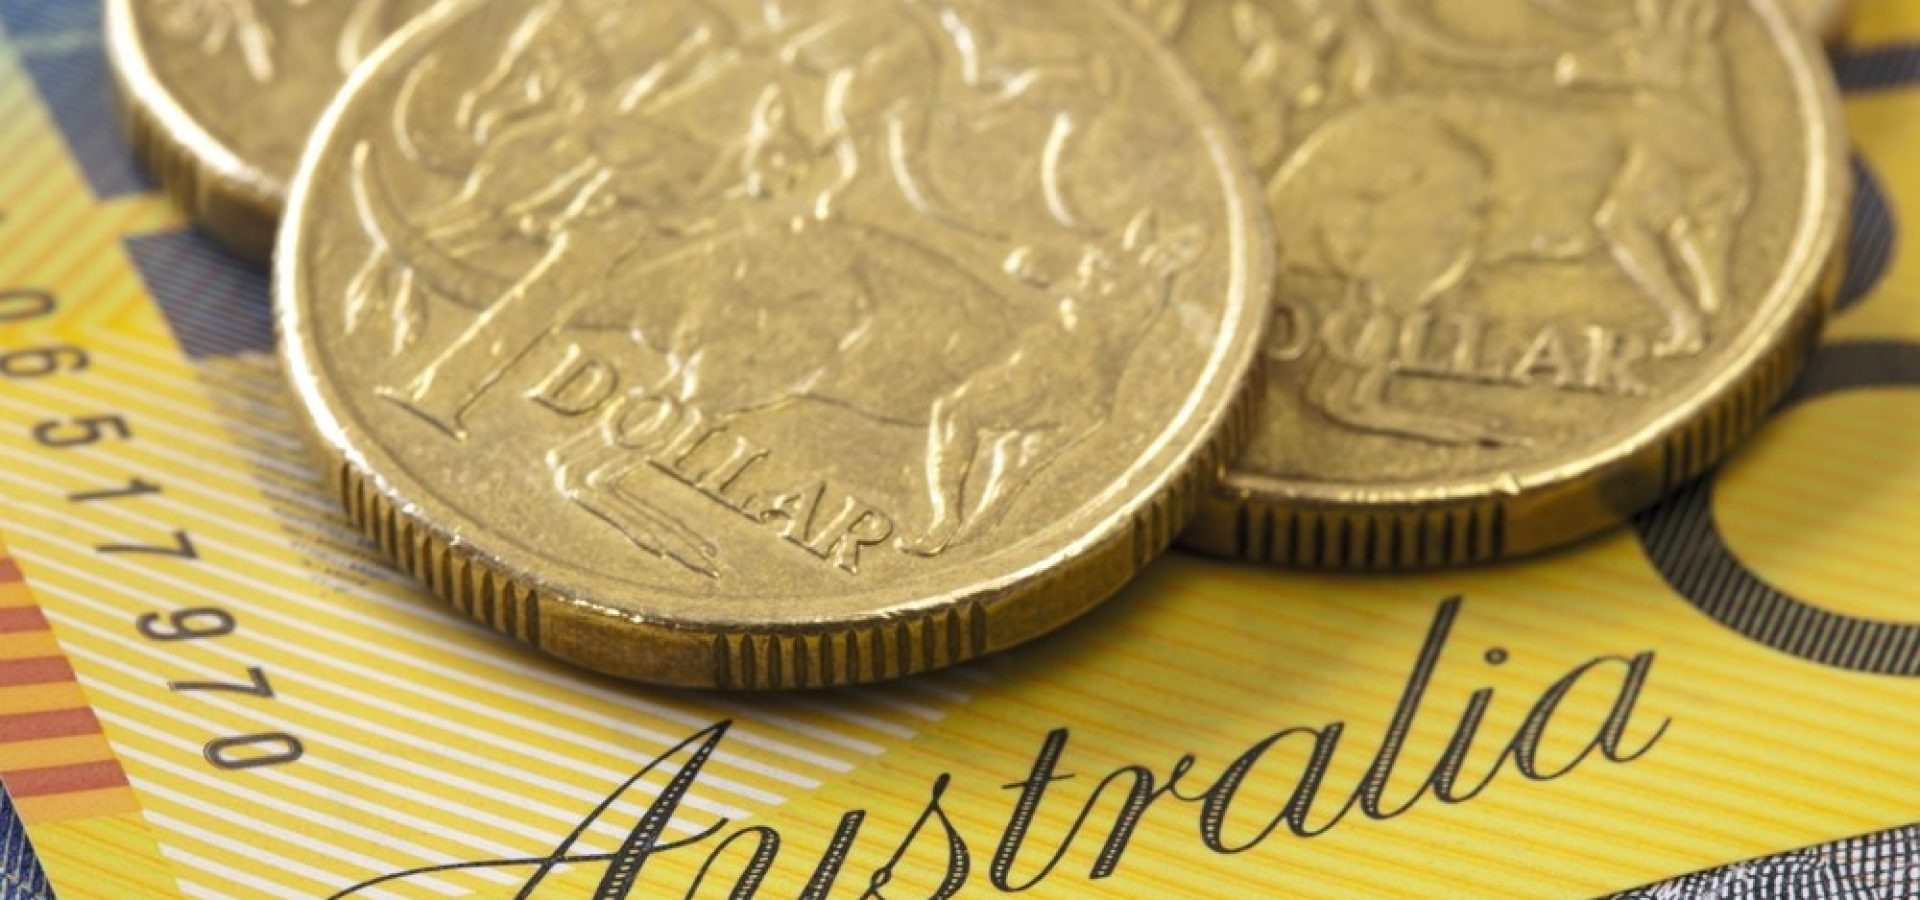 Wibest – Australian Money: Australian dollar bills and coins.